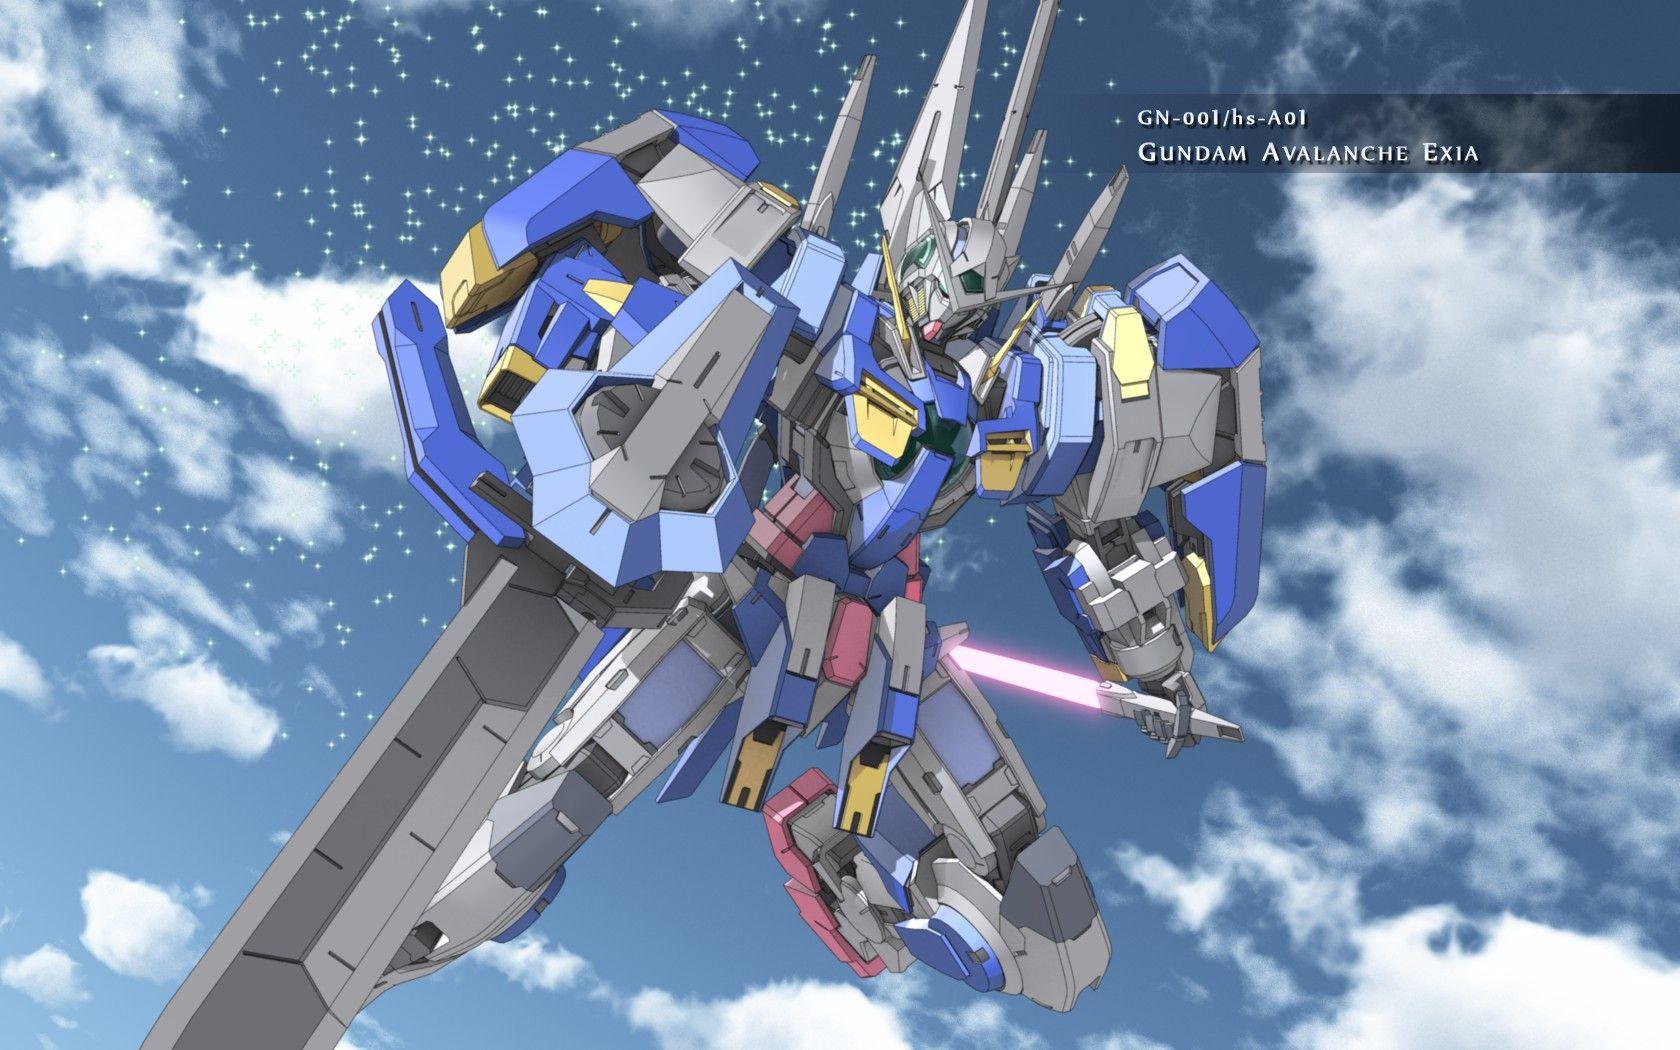 Gundam Avalanche Exia Sky Wallpaper. The Gundam